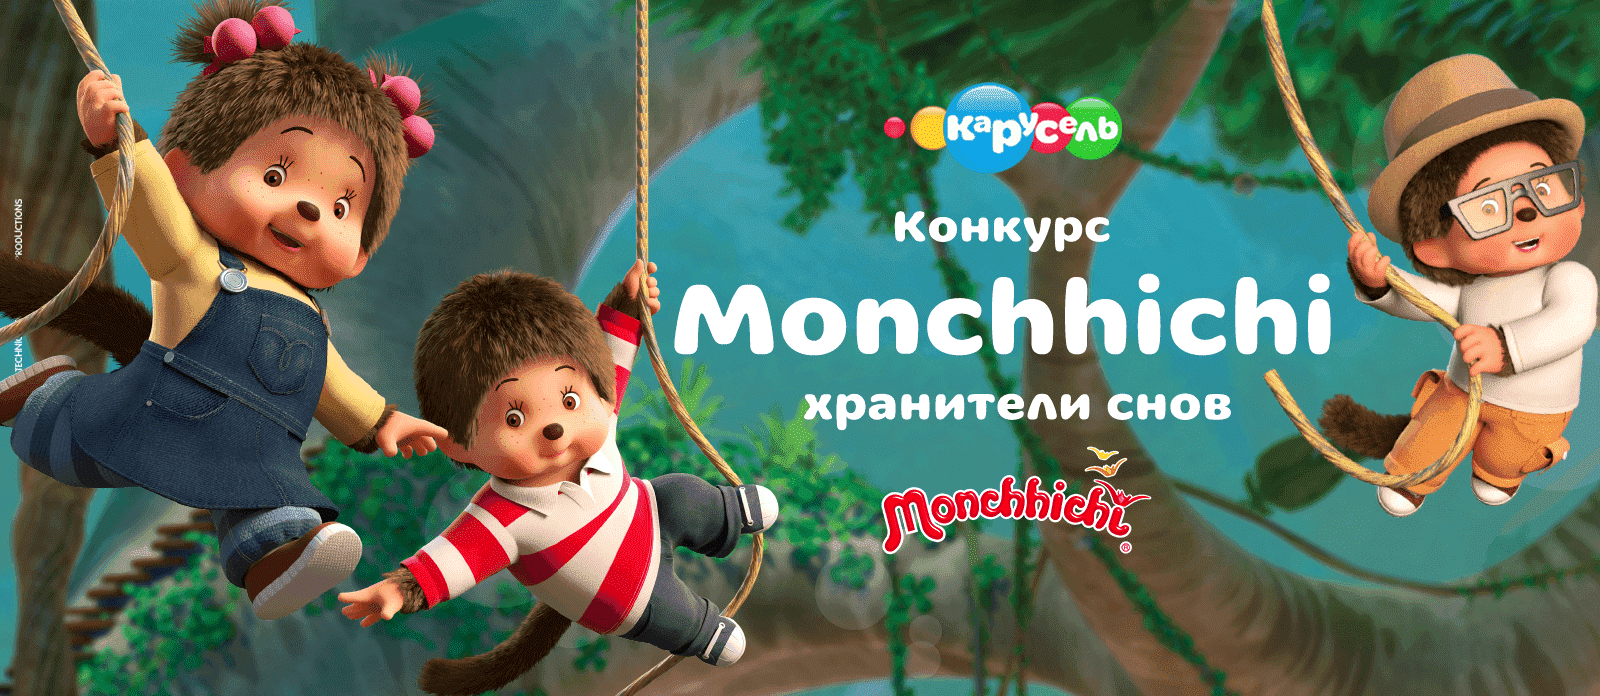 Monchhichi – хранители снов